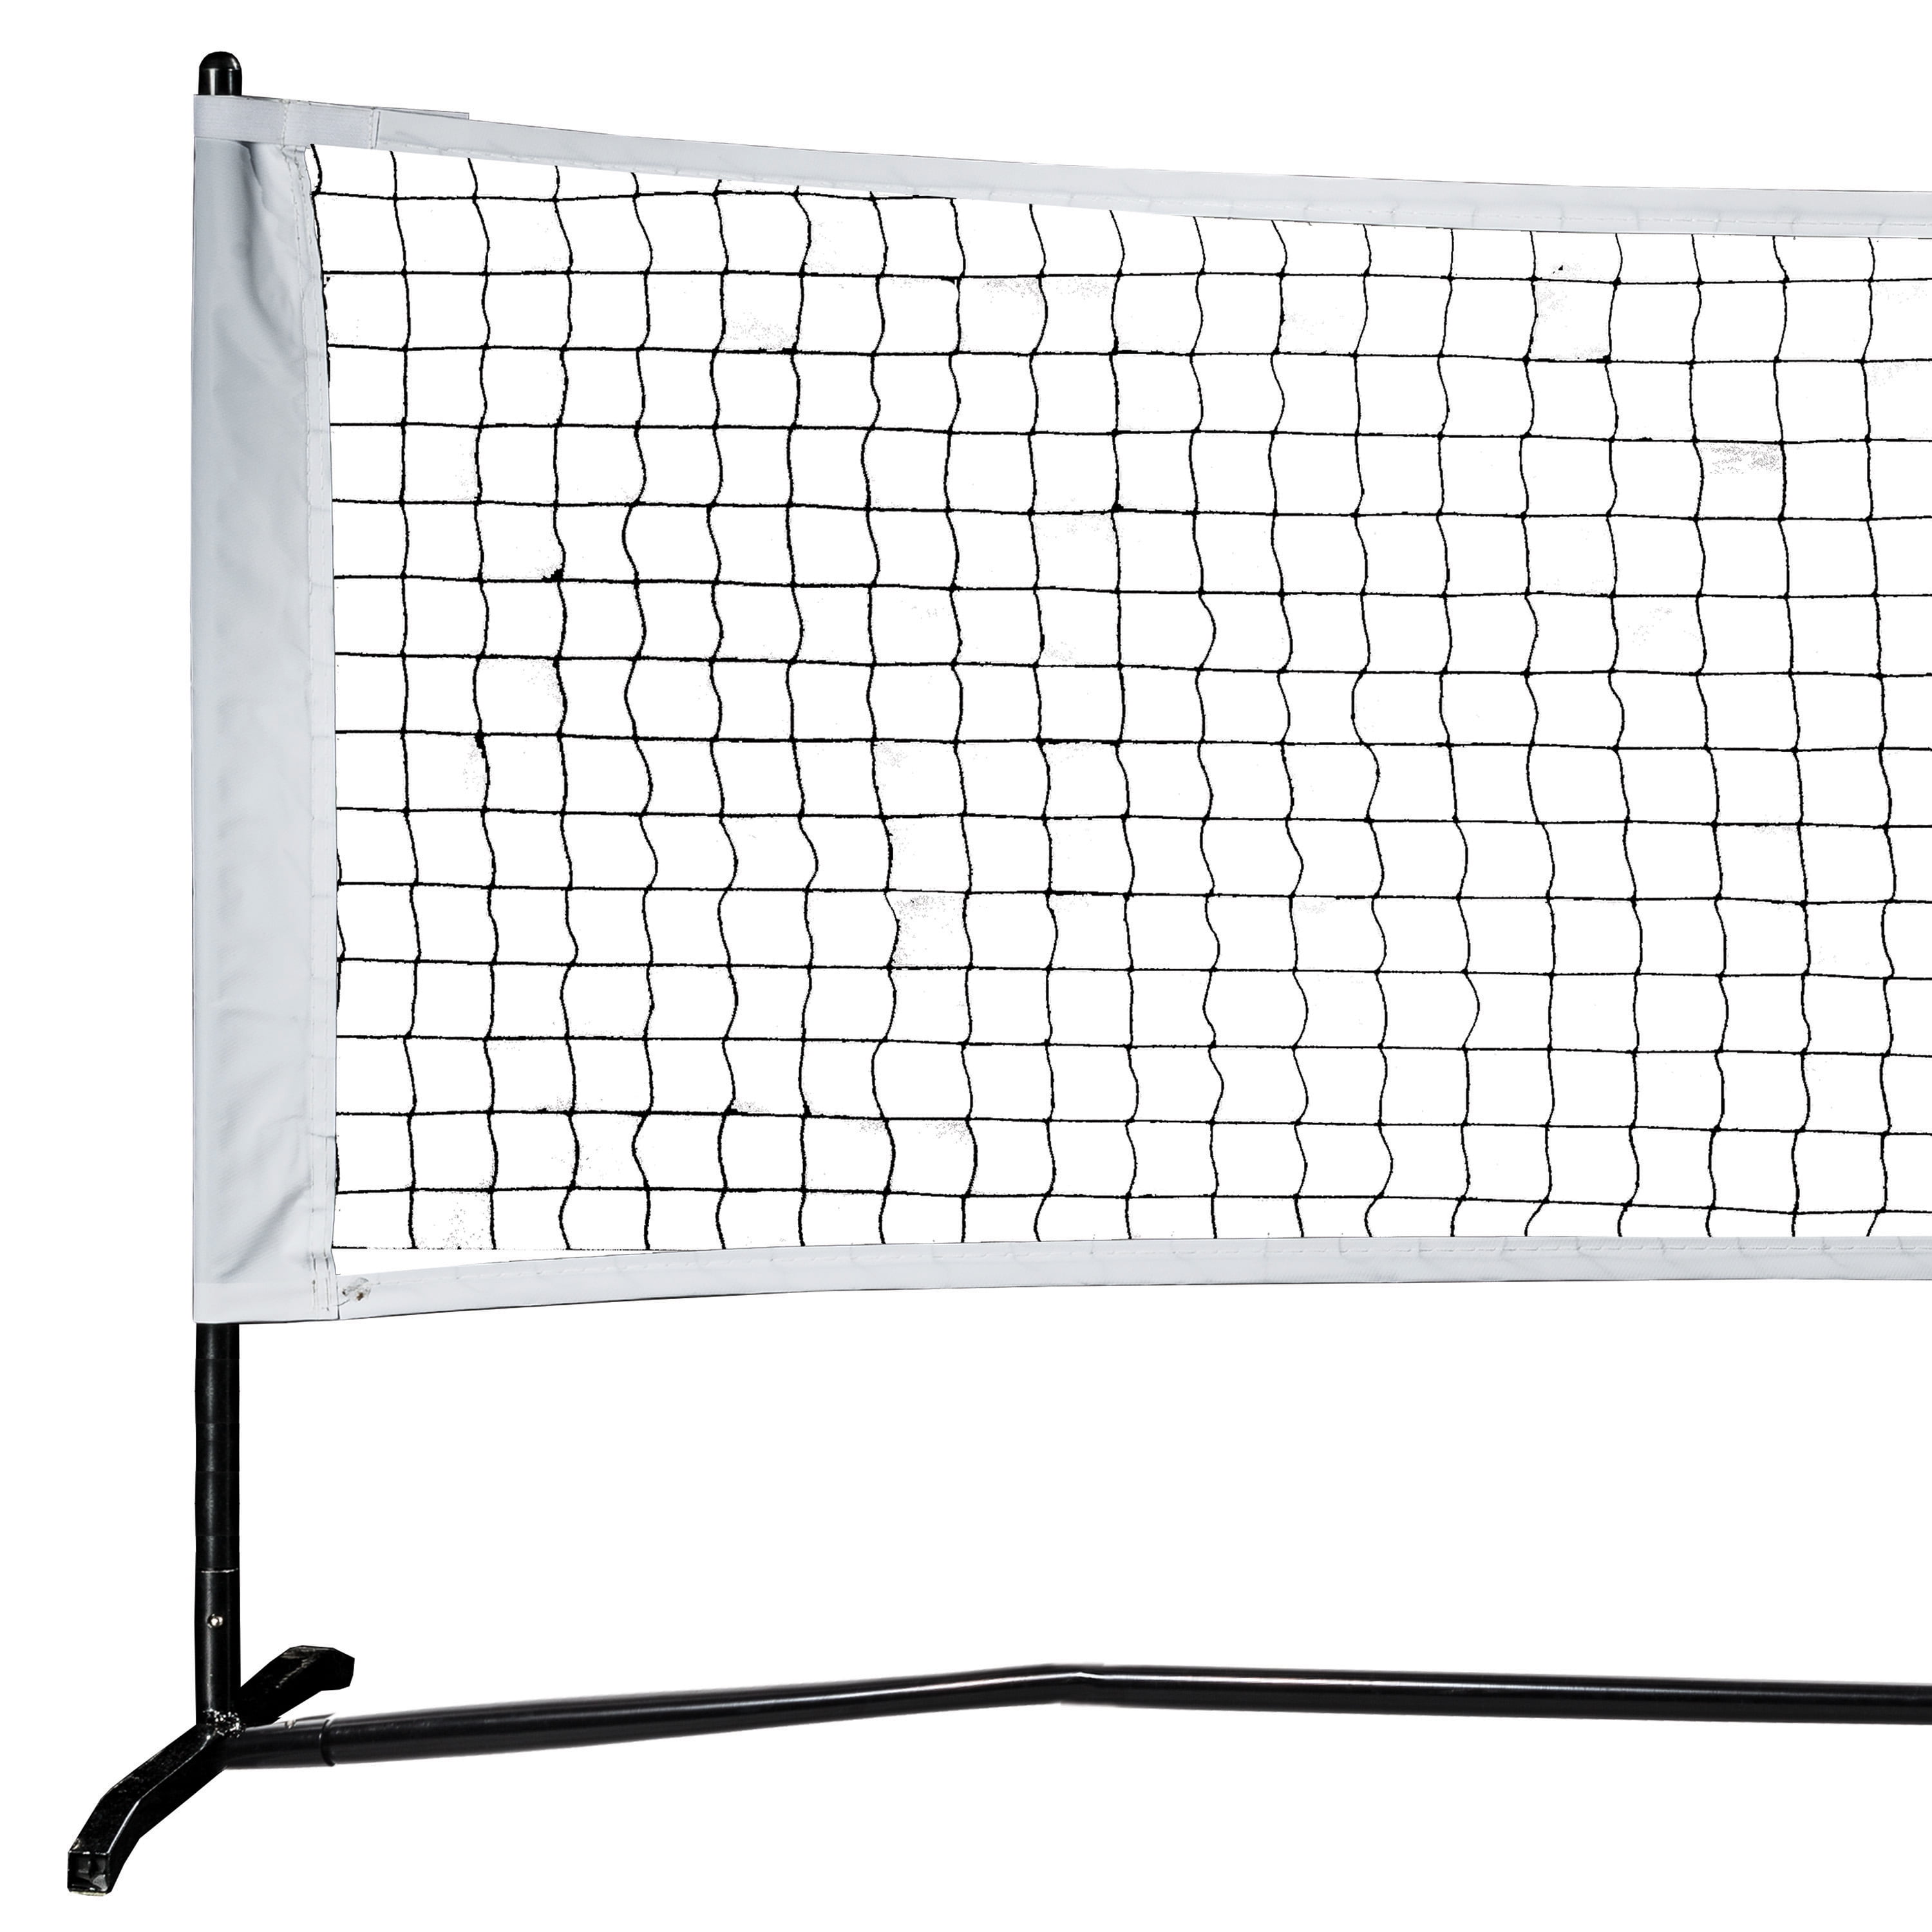 Zeny 22FT Portable Pickleball Tennis Net Stand & Net & Carry Bag Steel Poles 